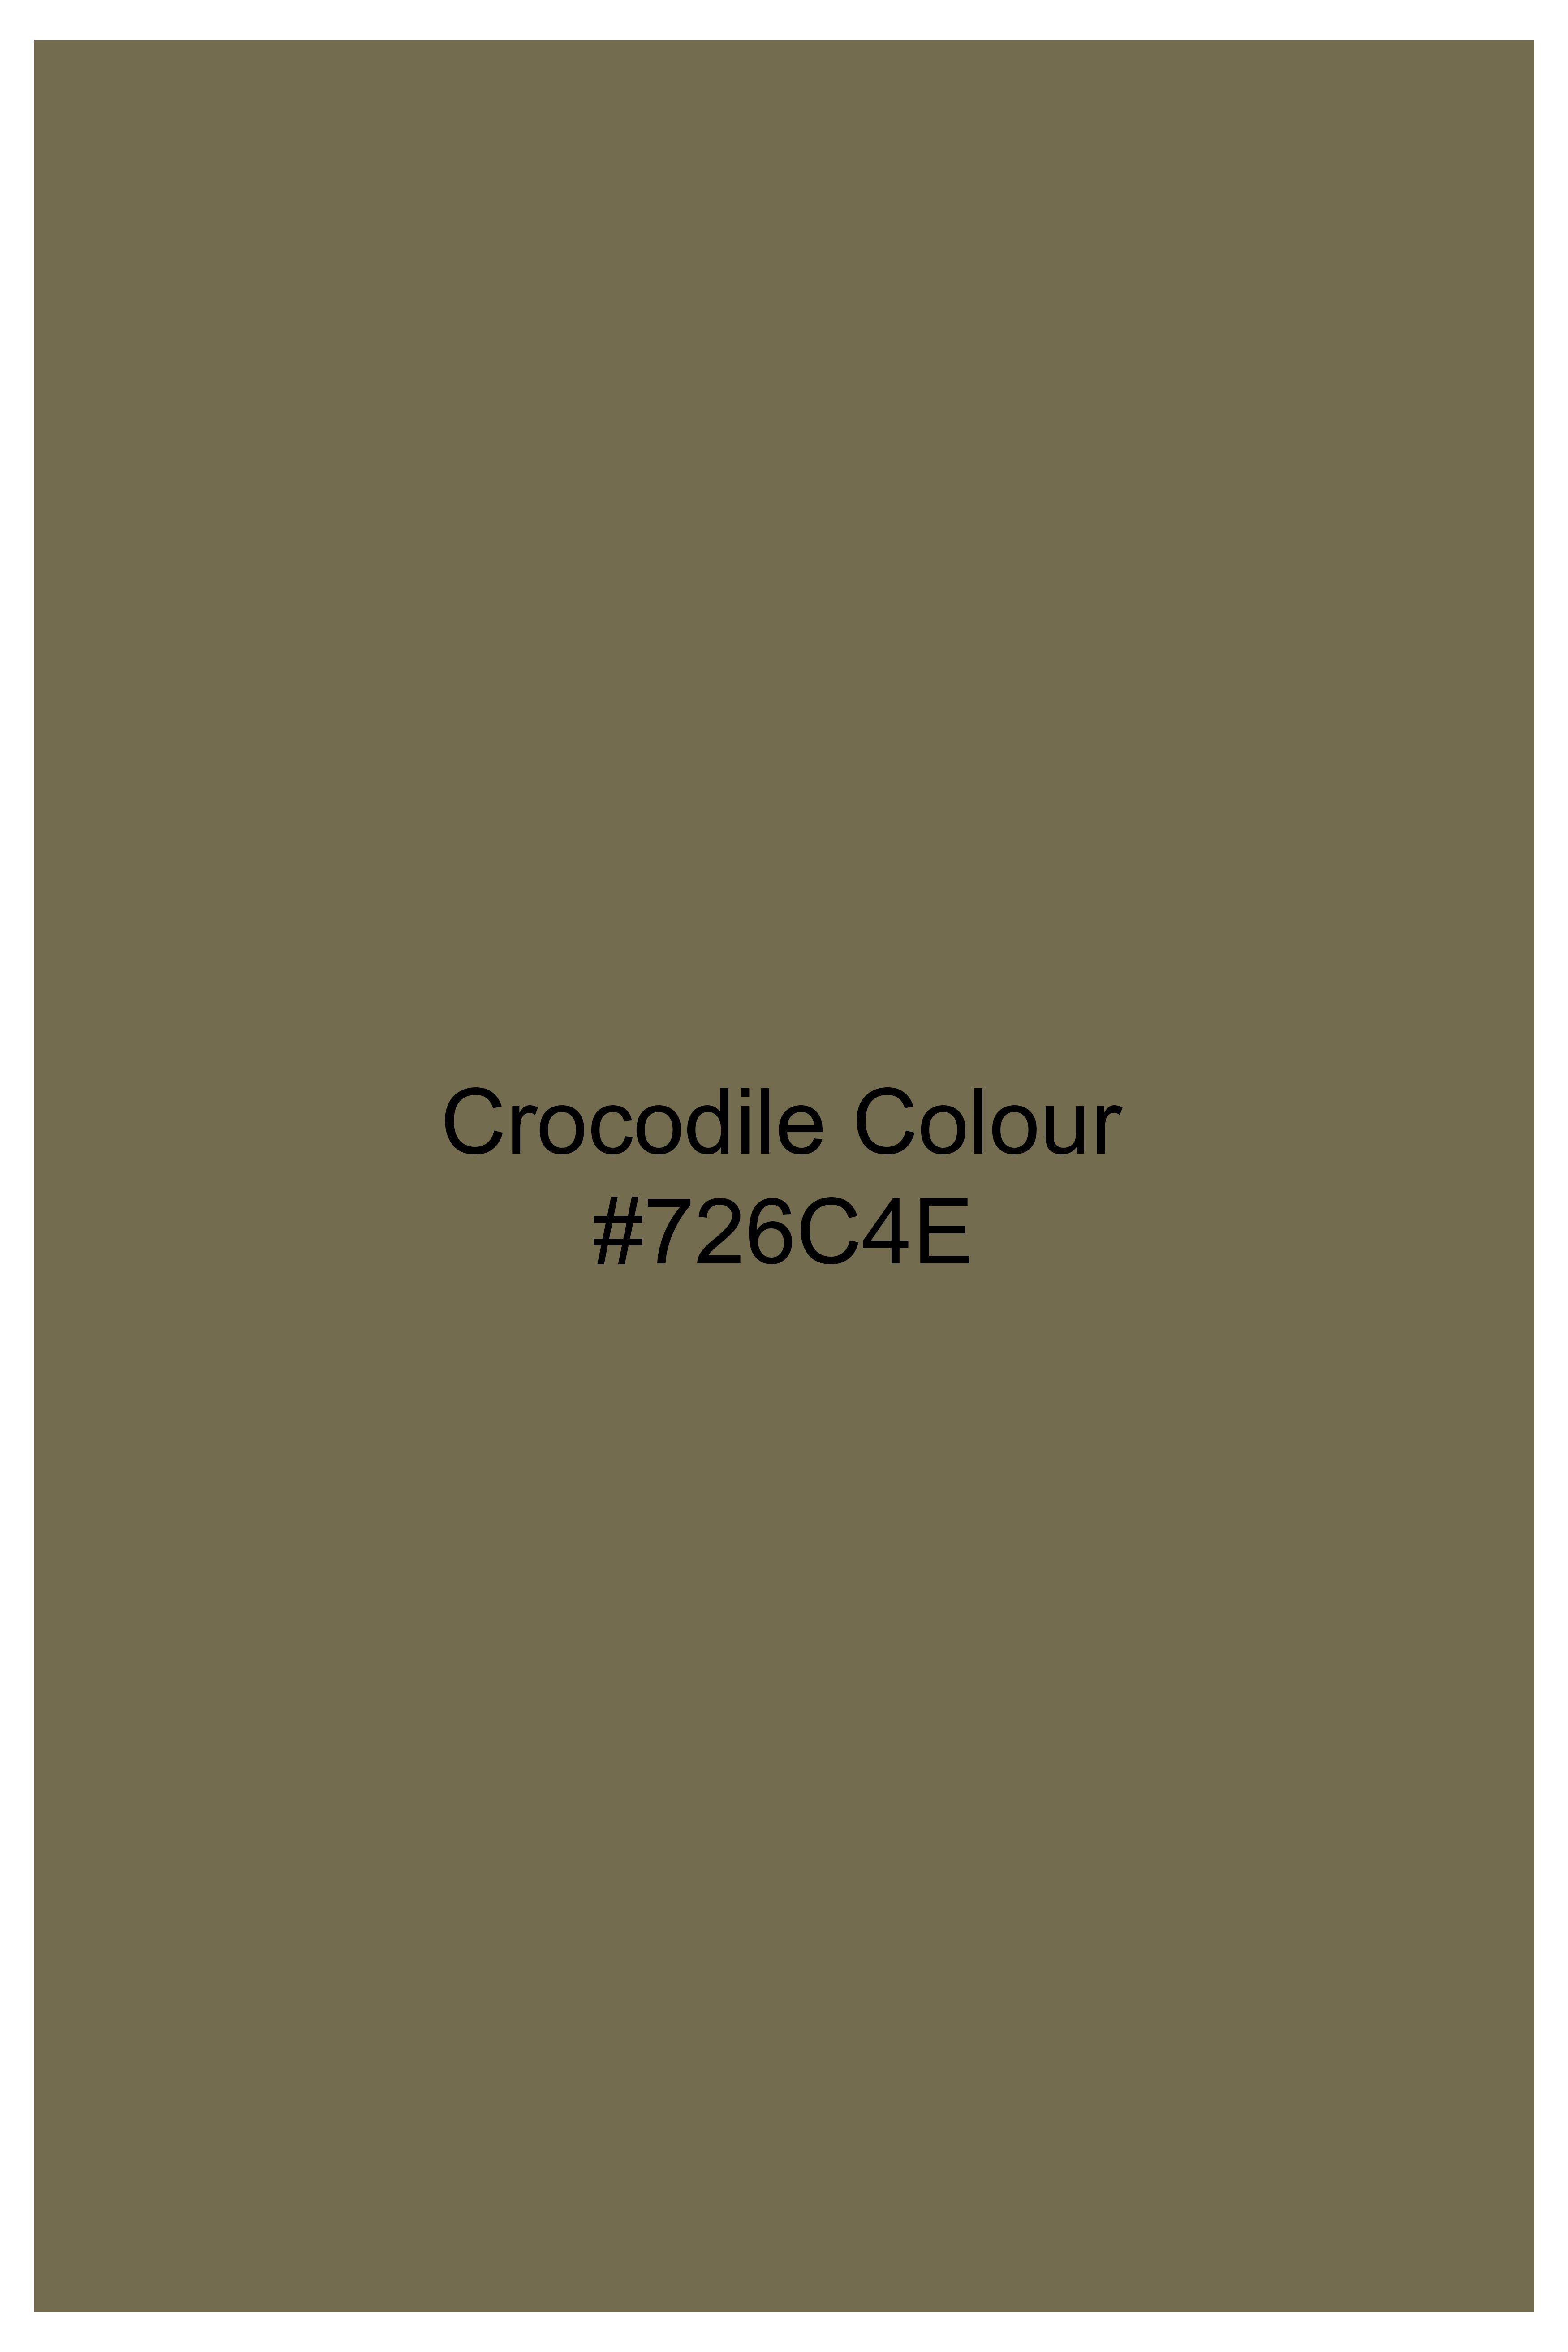 Crocodile Brown Checkered Dobby Textured Premium Giza Cotton Shirt 10572-CA-BLK-38, 10572-CA-BLK-H-38, 10572-CA-BLK-39, 10572-CA-BLK-H-39, 10572-CA-BLK-40, 10572-CA-BLK-H-40, 10572-CA-BLK-42, 10572-CA-BLK-H-42, 10572-CA-BLK-44, 10572-CA-BLK-H-44, 10572-CA-BLK-46, 10572-CA-BLK-H-46, 10572-CA-BLK-48, 10572-CA-BLK-H-48, 10572-CA-BLK-50, 10572-CA-BLK-H-50, 10572-CA-BLK-52, 10572-CA-BLK-H-52